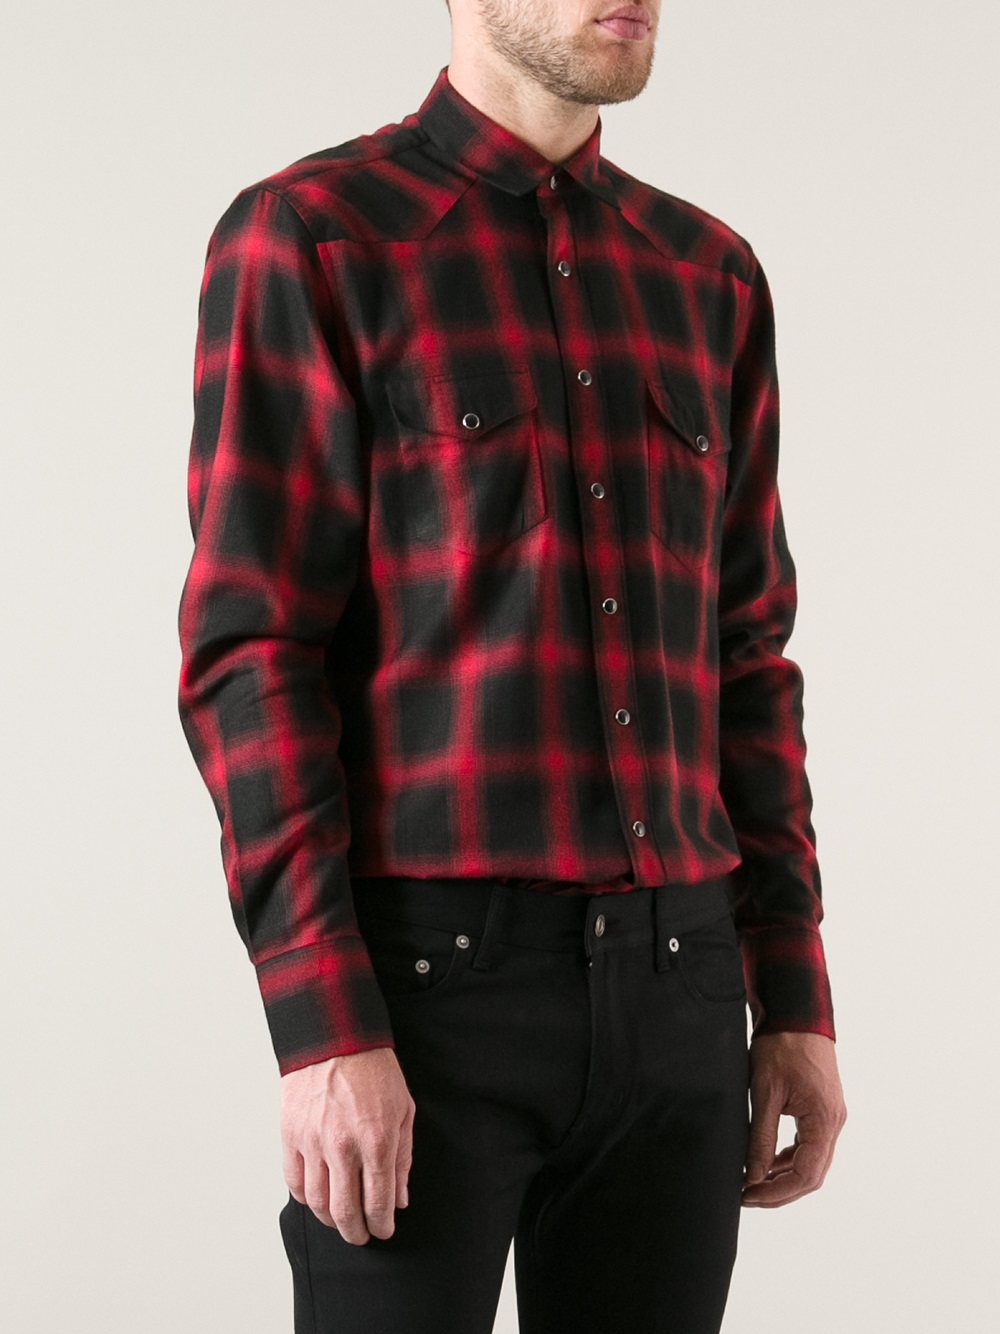 Saint Laurent Flannel Check Button Up Shirt Red Grey Cotton